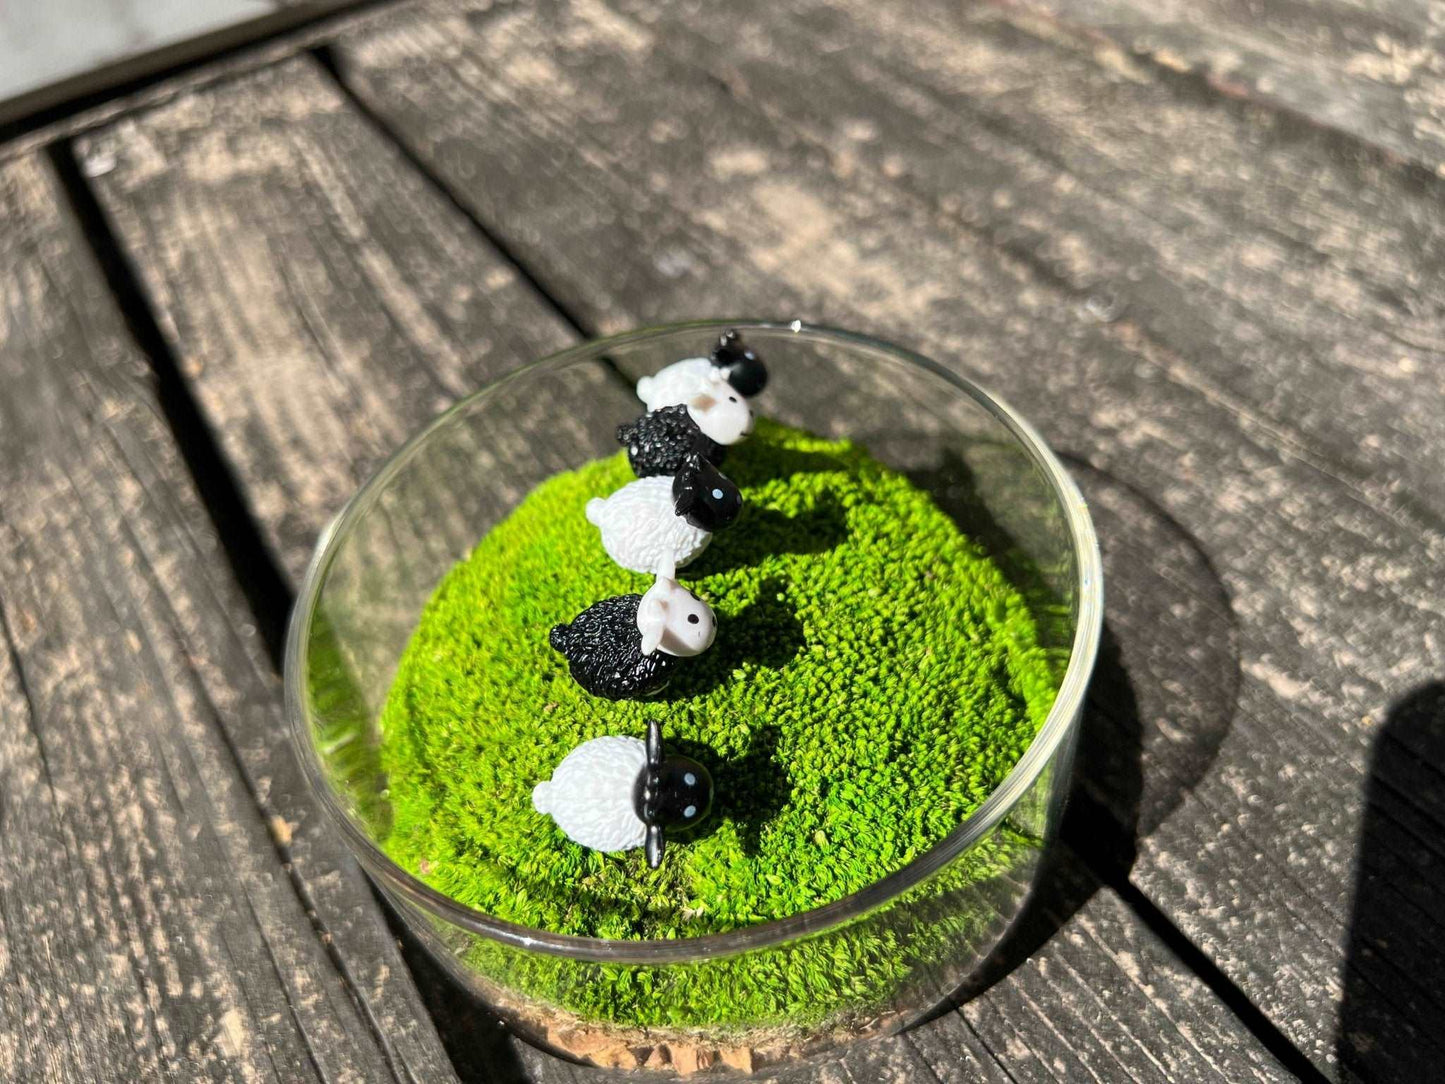 Mini Sheep Desktop Decoration Micro Landscape Lawn Handmade Preserved Moss Art